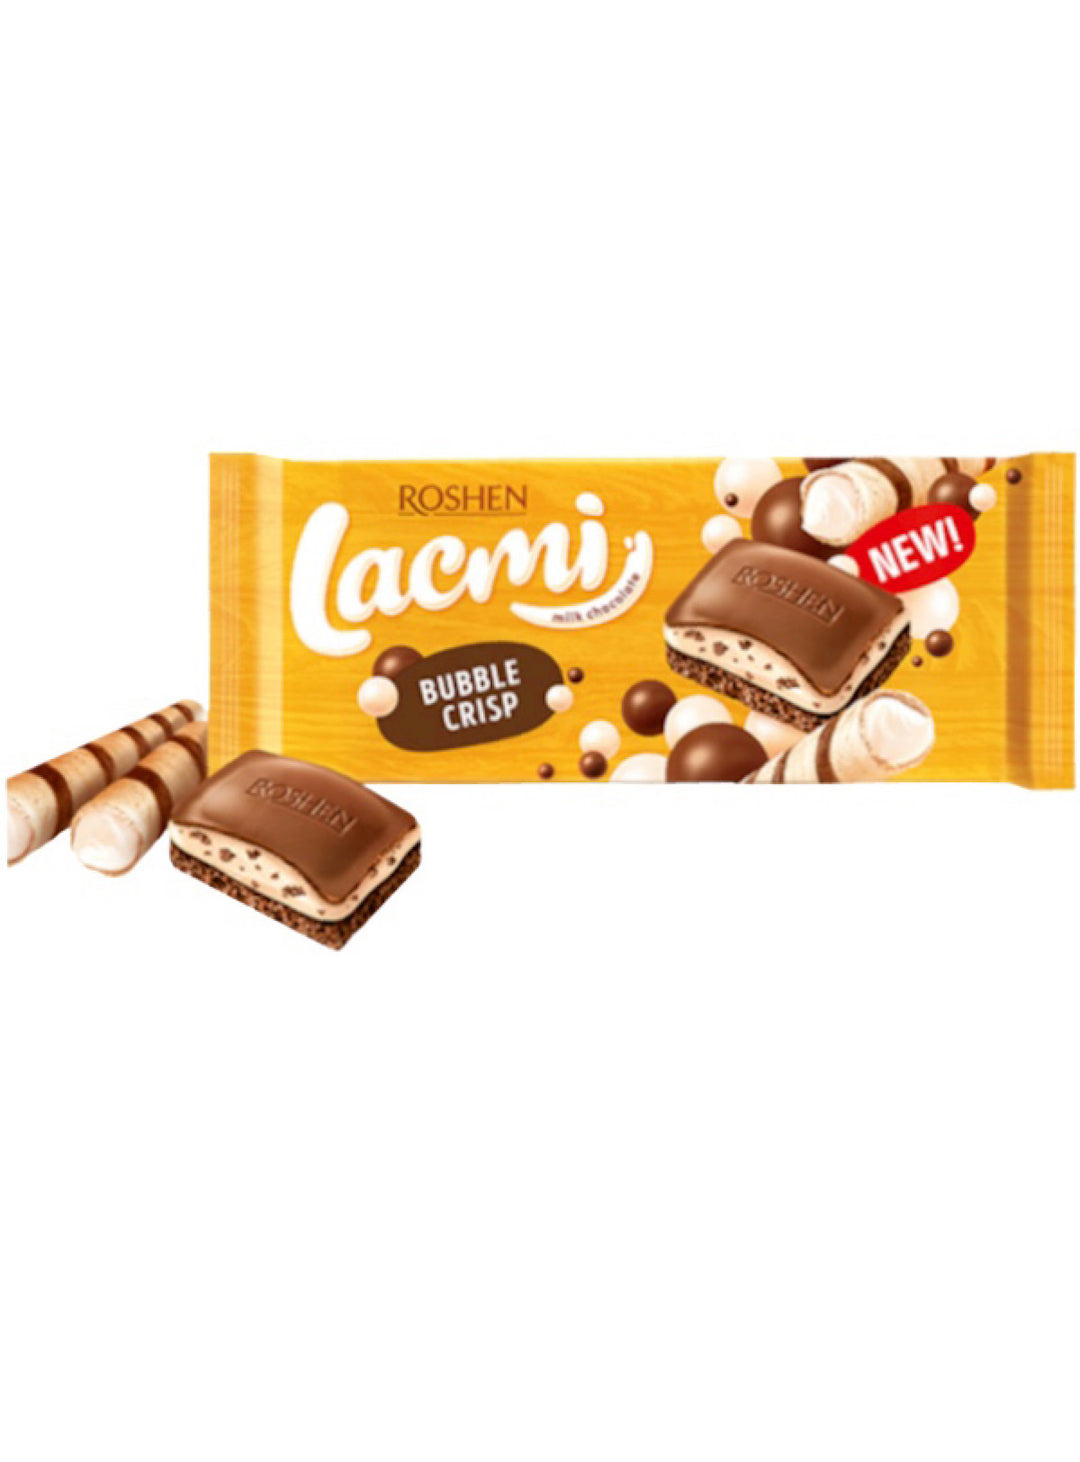 Chocolate Bar Lacmi Aerated Bubble Crisp - Roshen - 85g